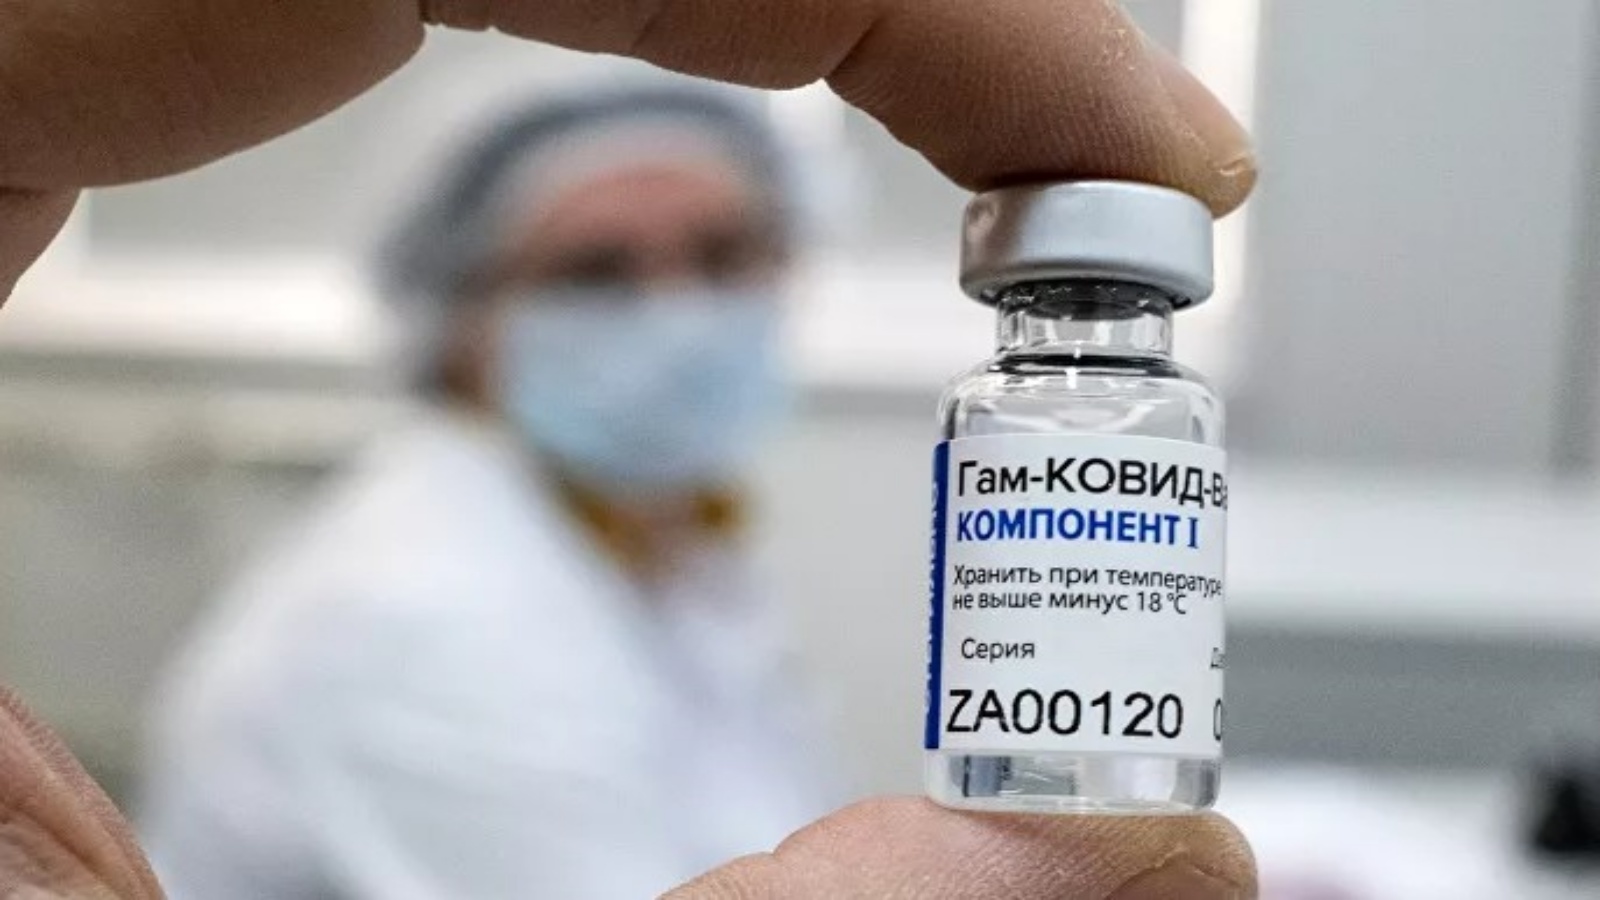 روسيا بدأت يوم 5 من ديسمبر حملات تطعيم لقاح 